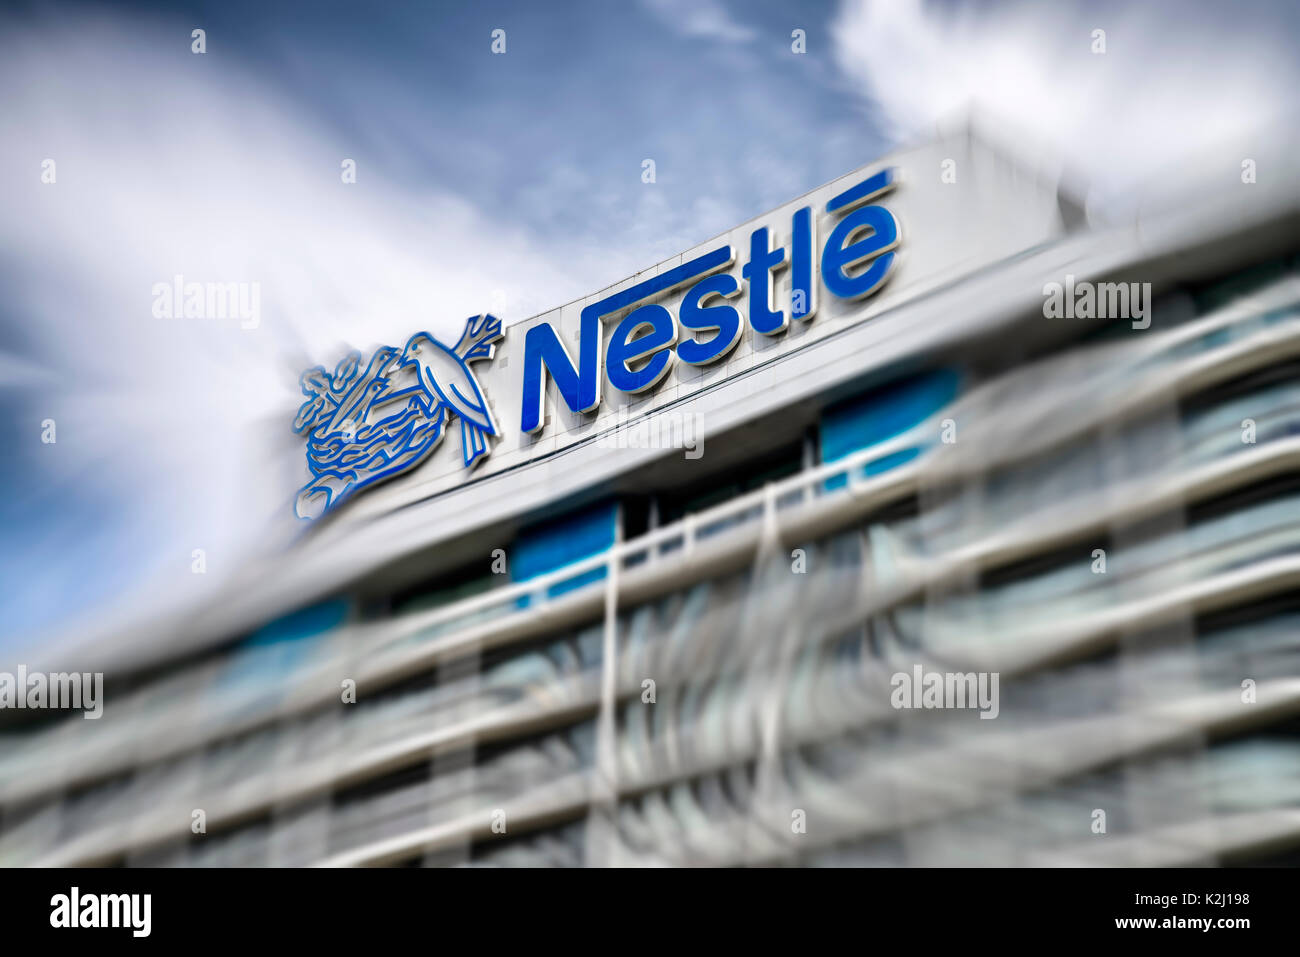 Nestle Business Services